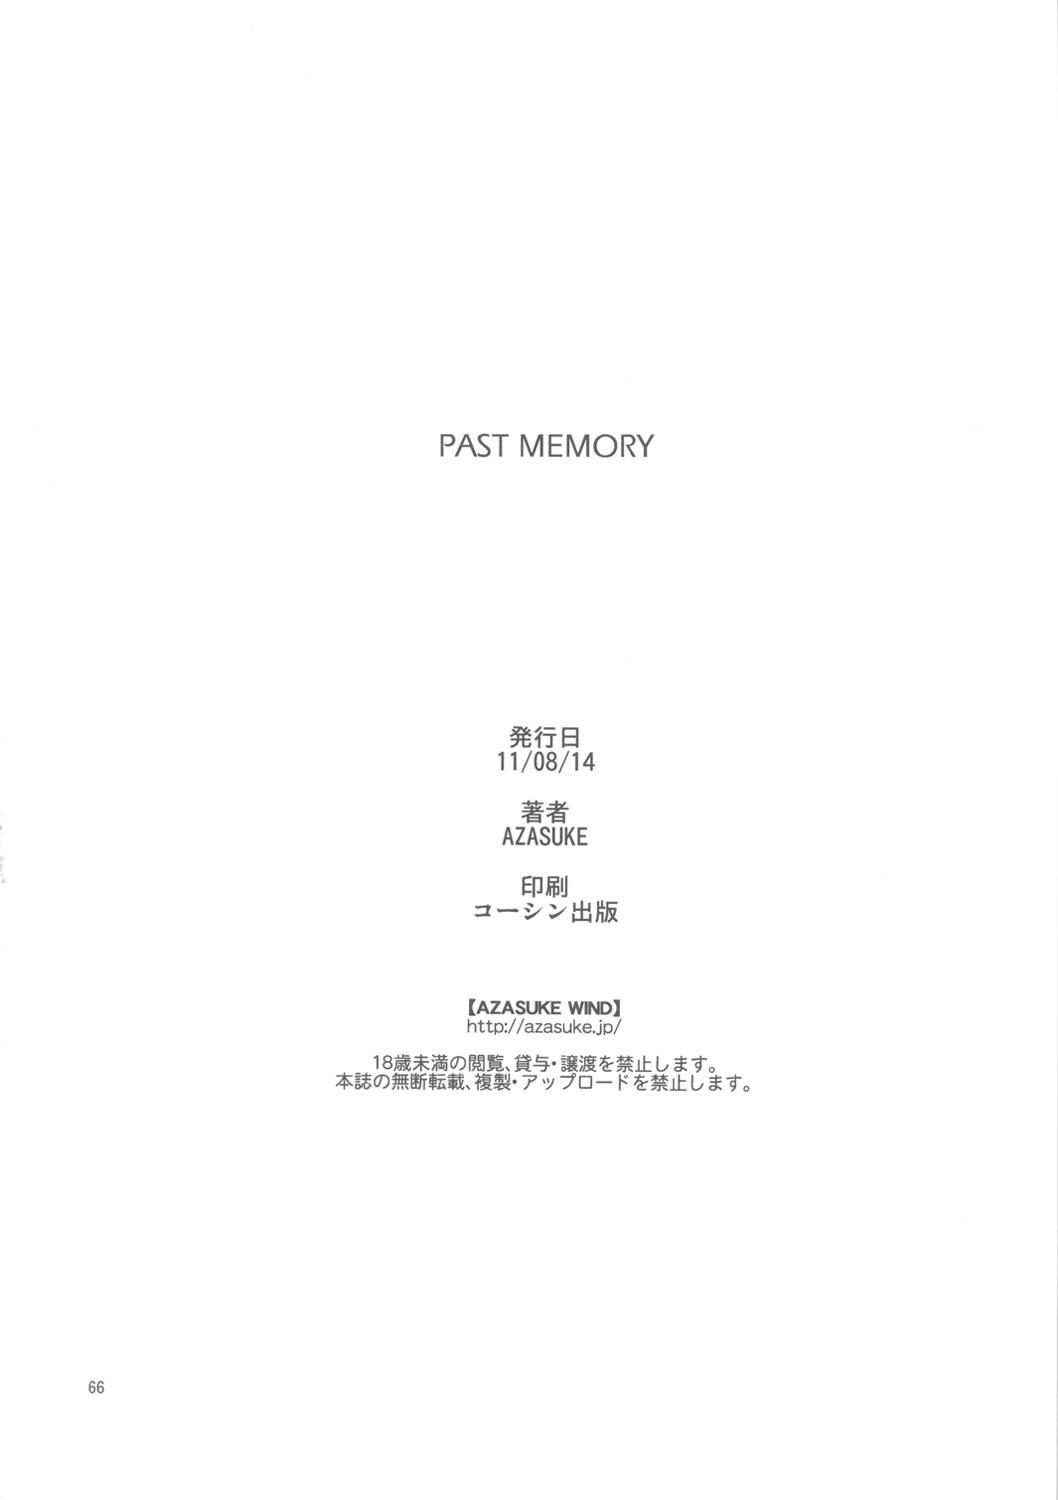 Banging PAST MEMORY - Black lagoon Art - Page 65